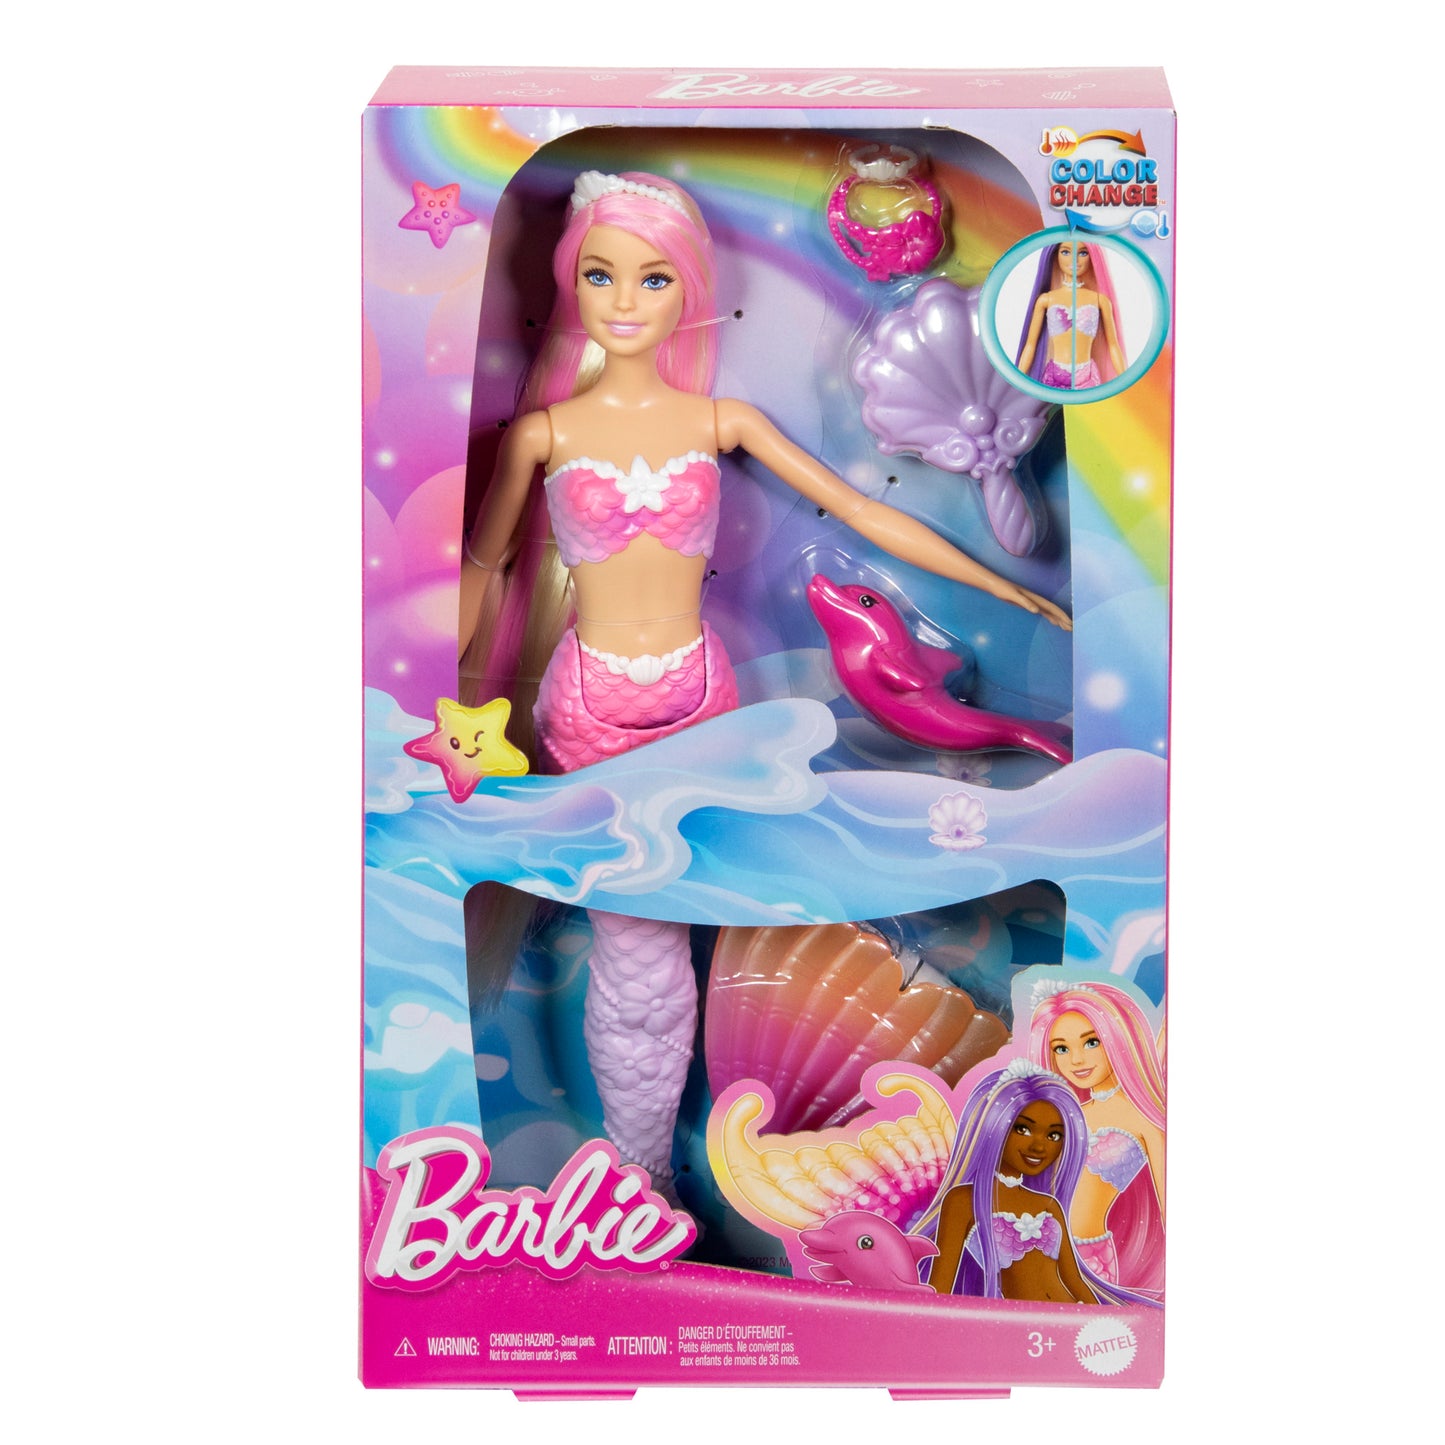 Barbie "Malibu" Mermaid Doll